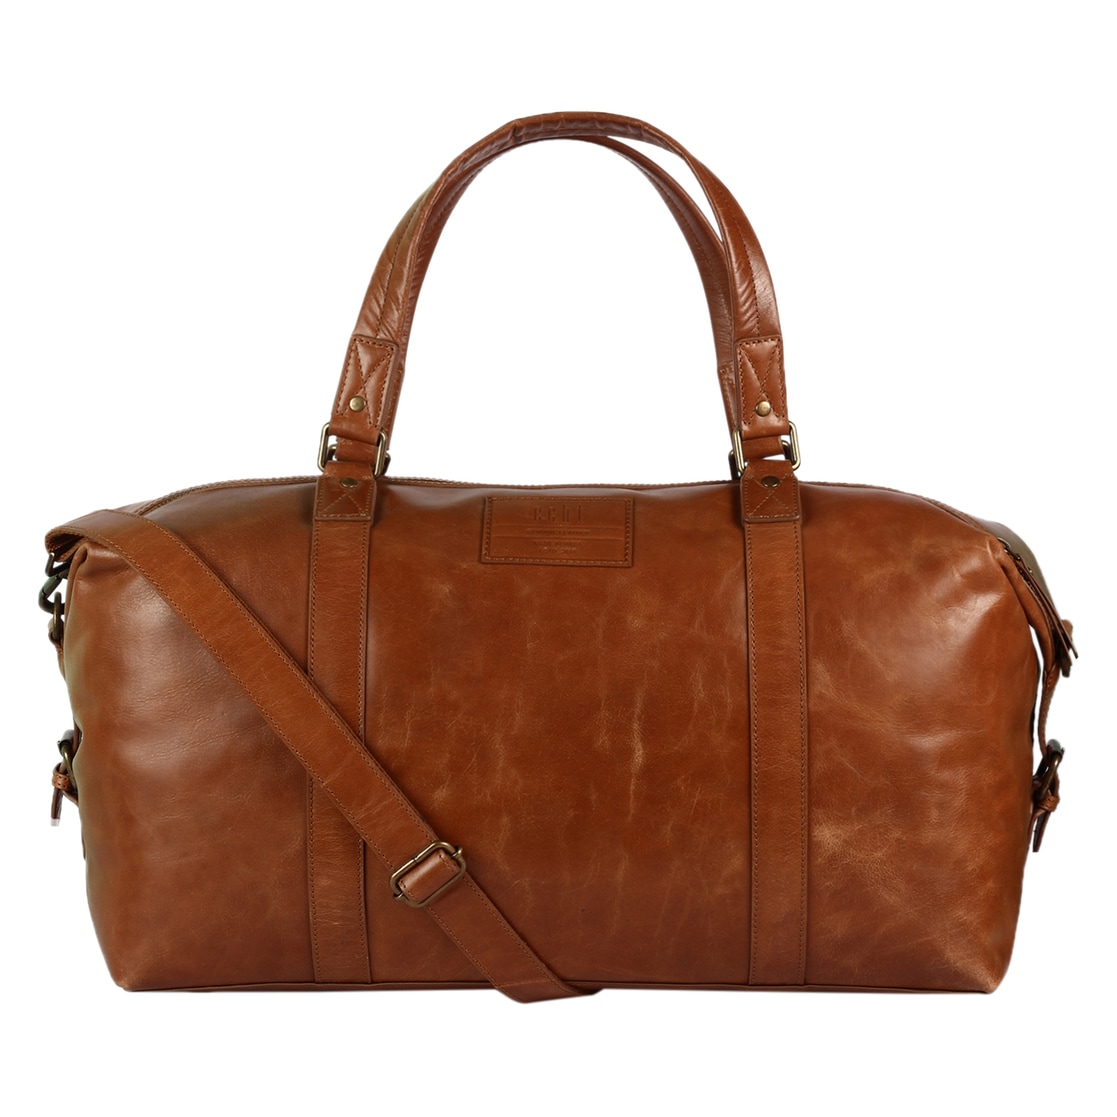 leather travel bag company